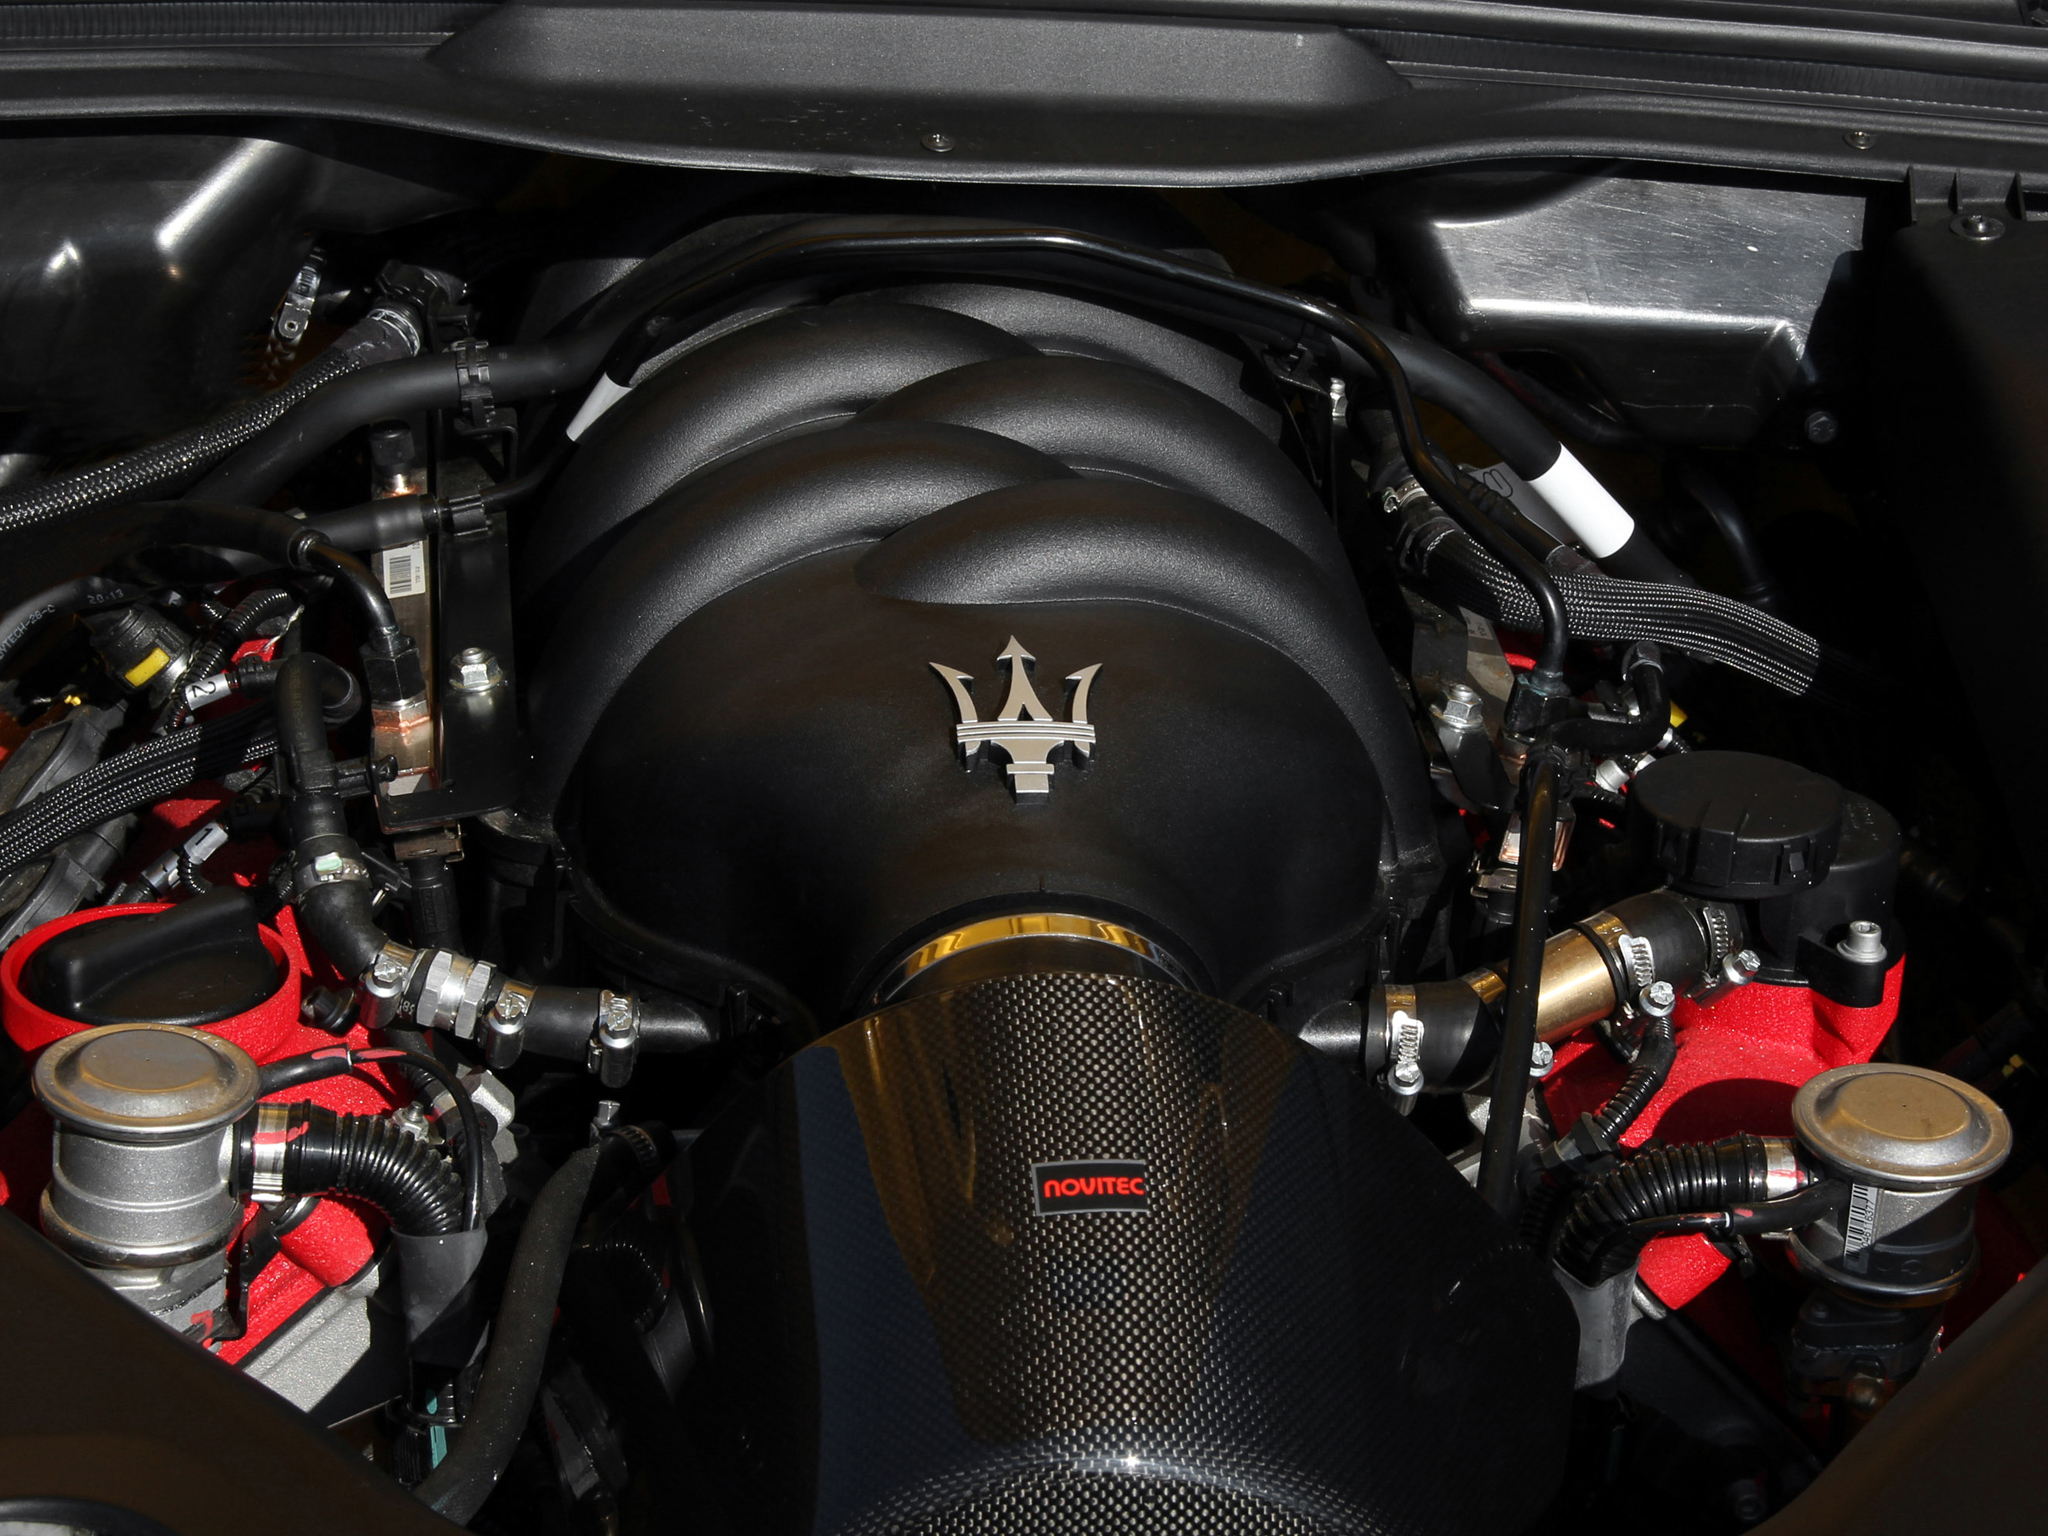 Двигатель мазерати. Maserati MC Stradale двигатель. Maserati Gran Turismo Stradale двигатель. Maserati GRANTURISMO MC Stradale engine. Двигатель Maserati v8.